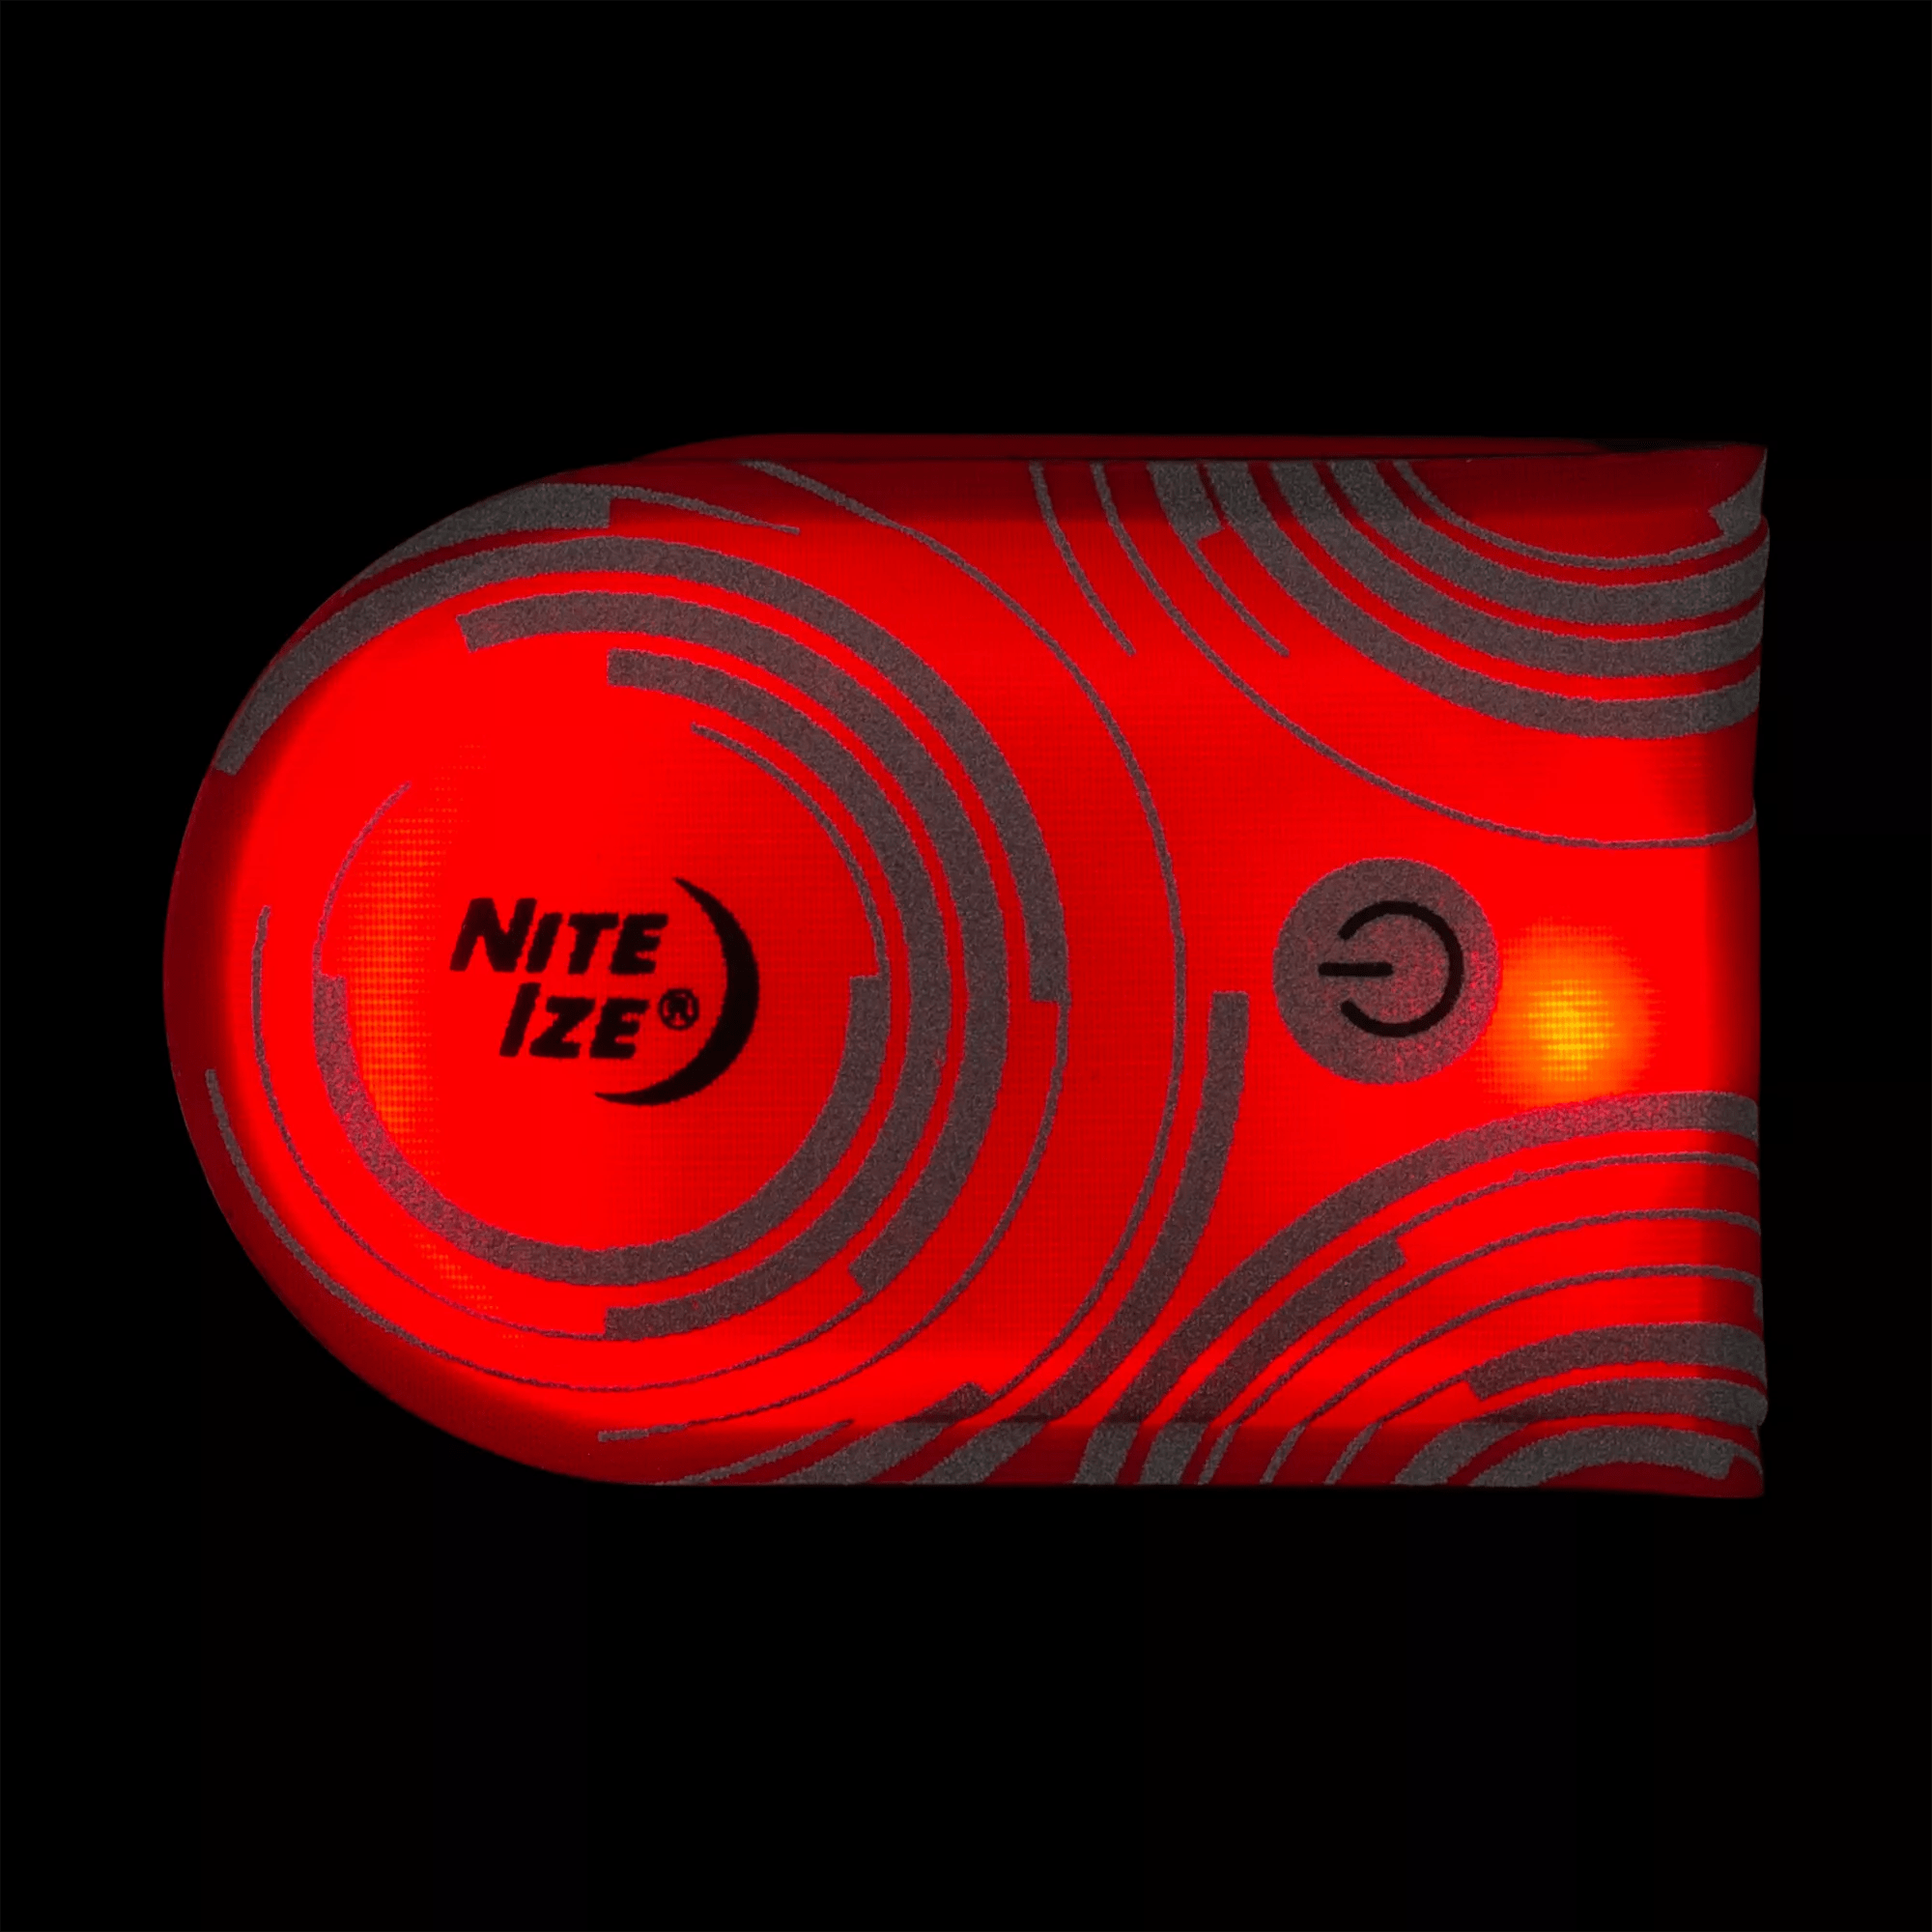 Nite Ize® TagLit™ Rechargeable Magnetic LED Marker